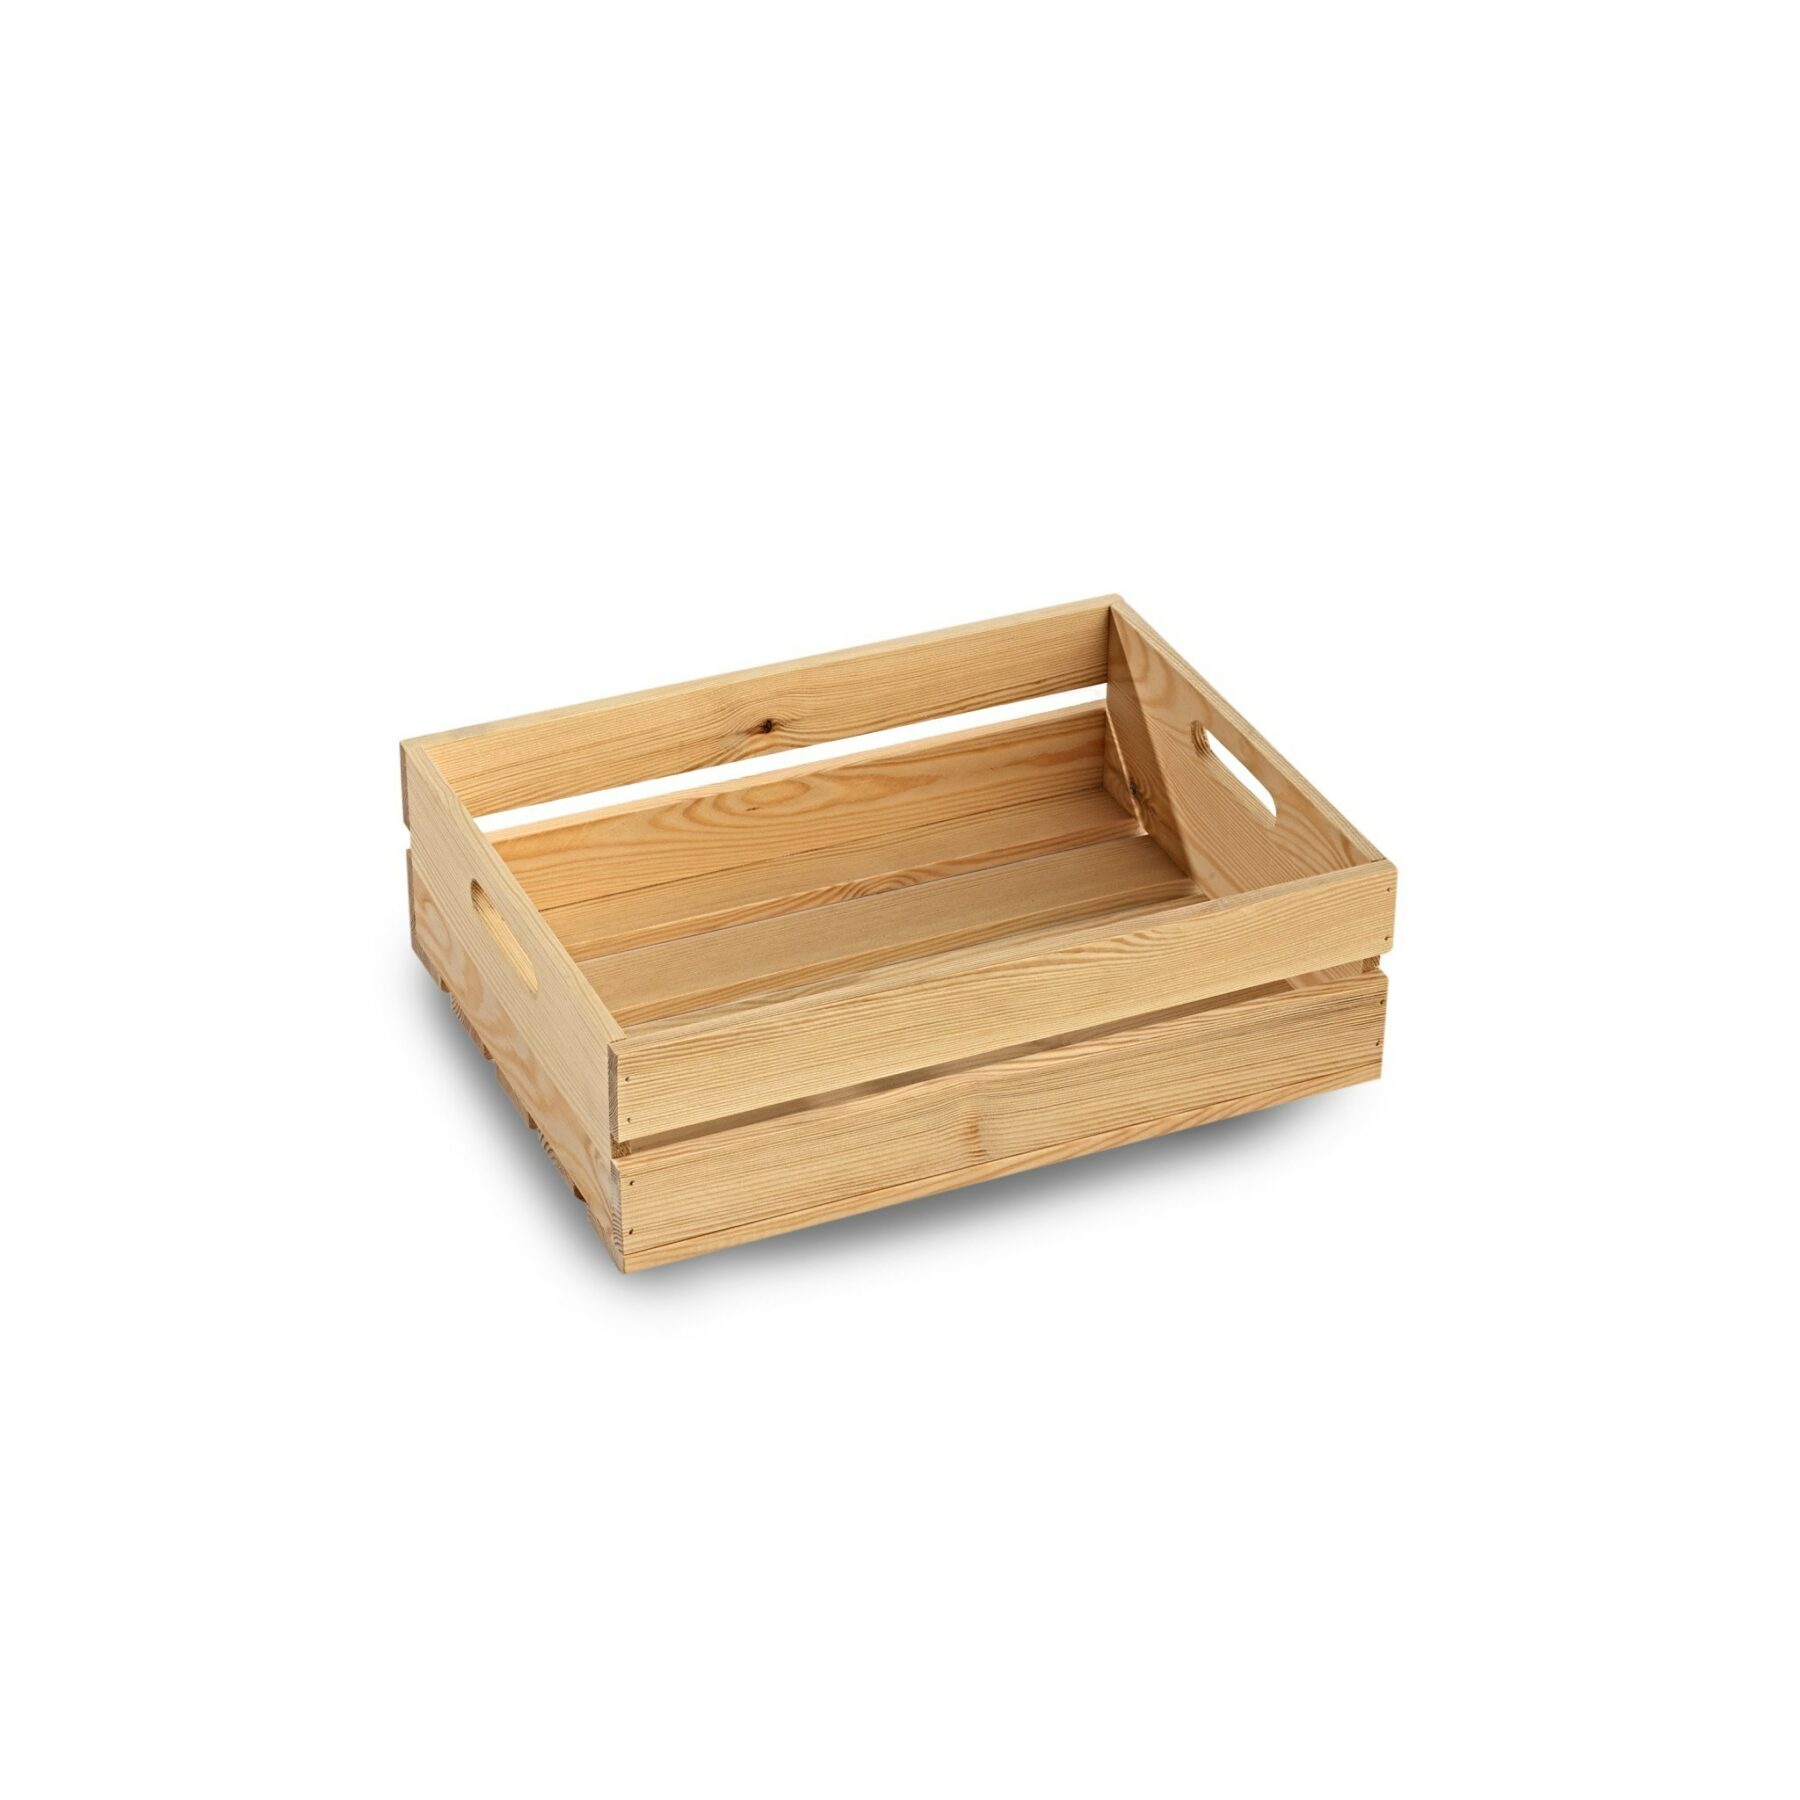 Wooden Crate - 40cm